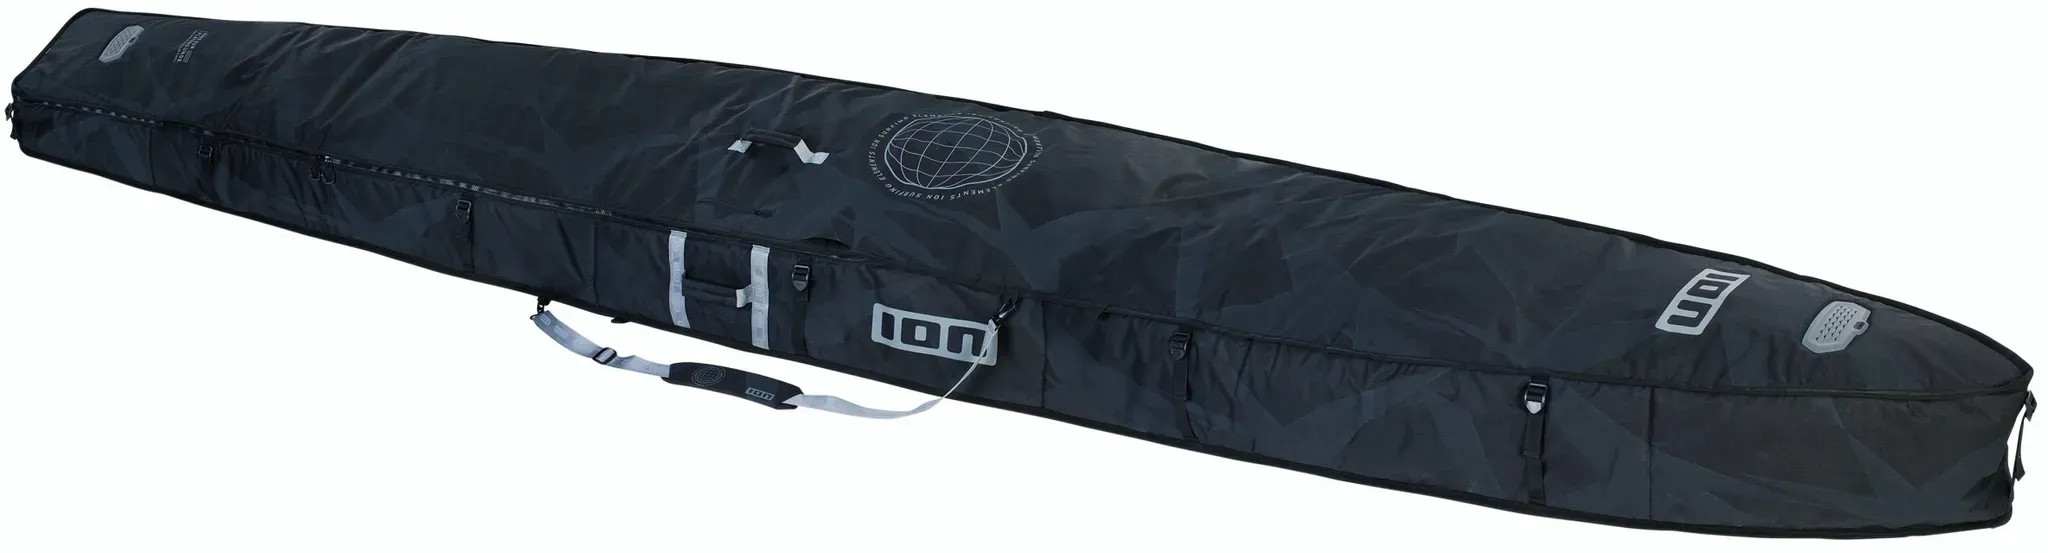 ION SUP Boardbag Race Tec Boardbag 24 Tasche Transport Schutz, Breite: 28.5'', Länge: 12'6'', Farbe: 900 black